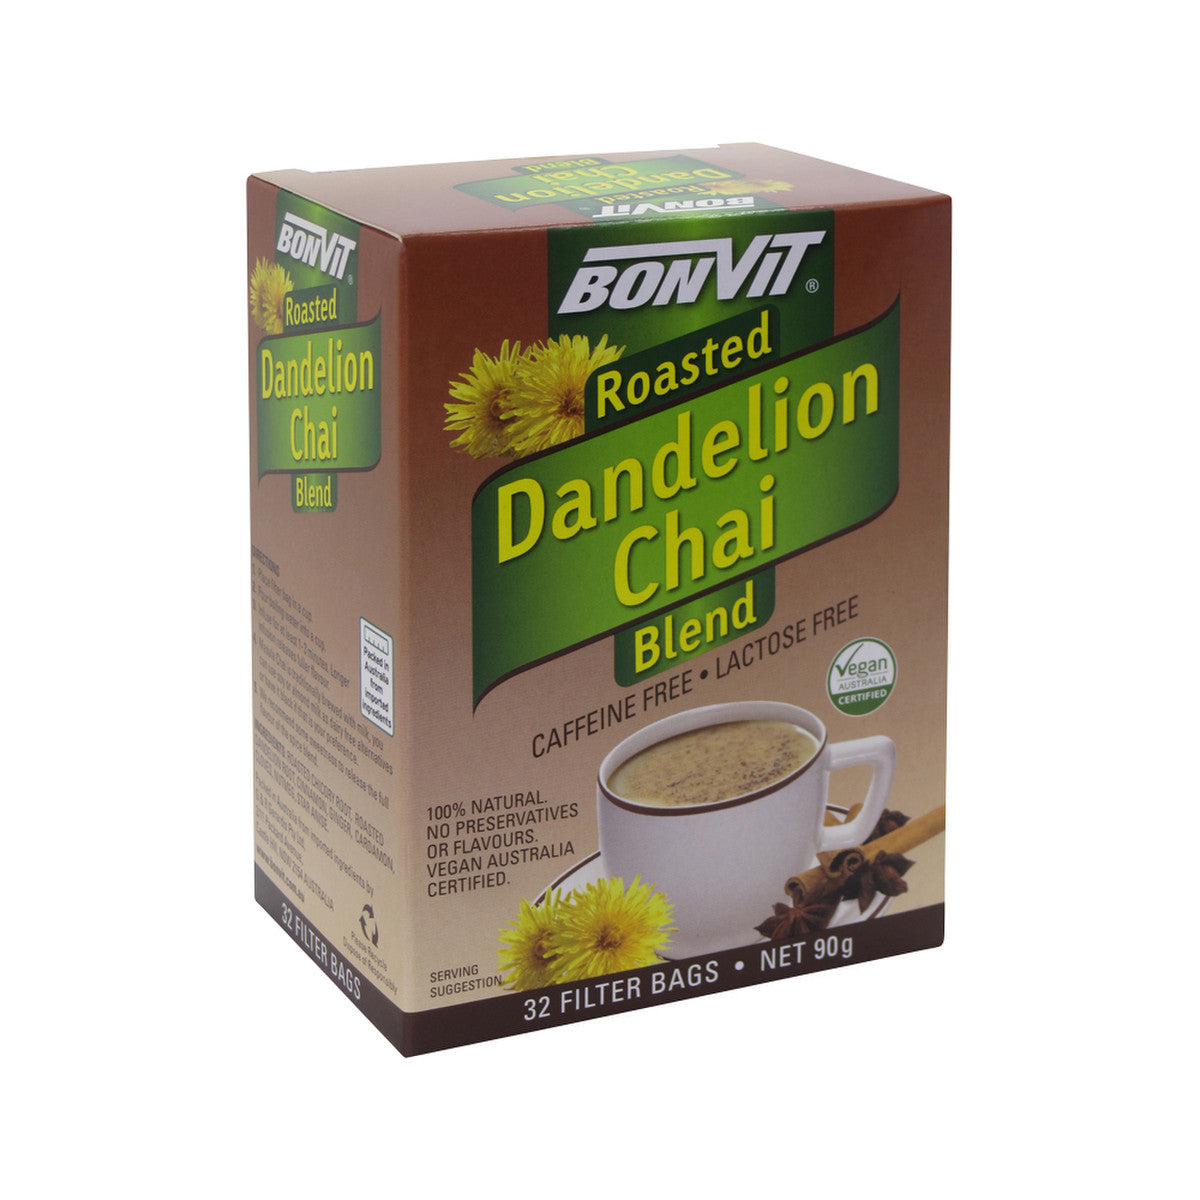 Bonvit - Roasted Dandelion Chai Blend Tea